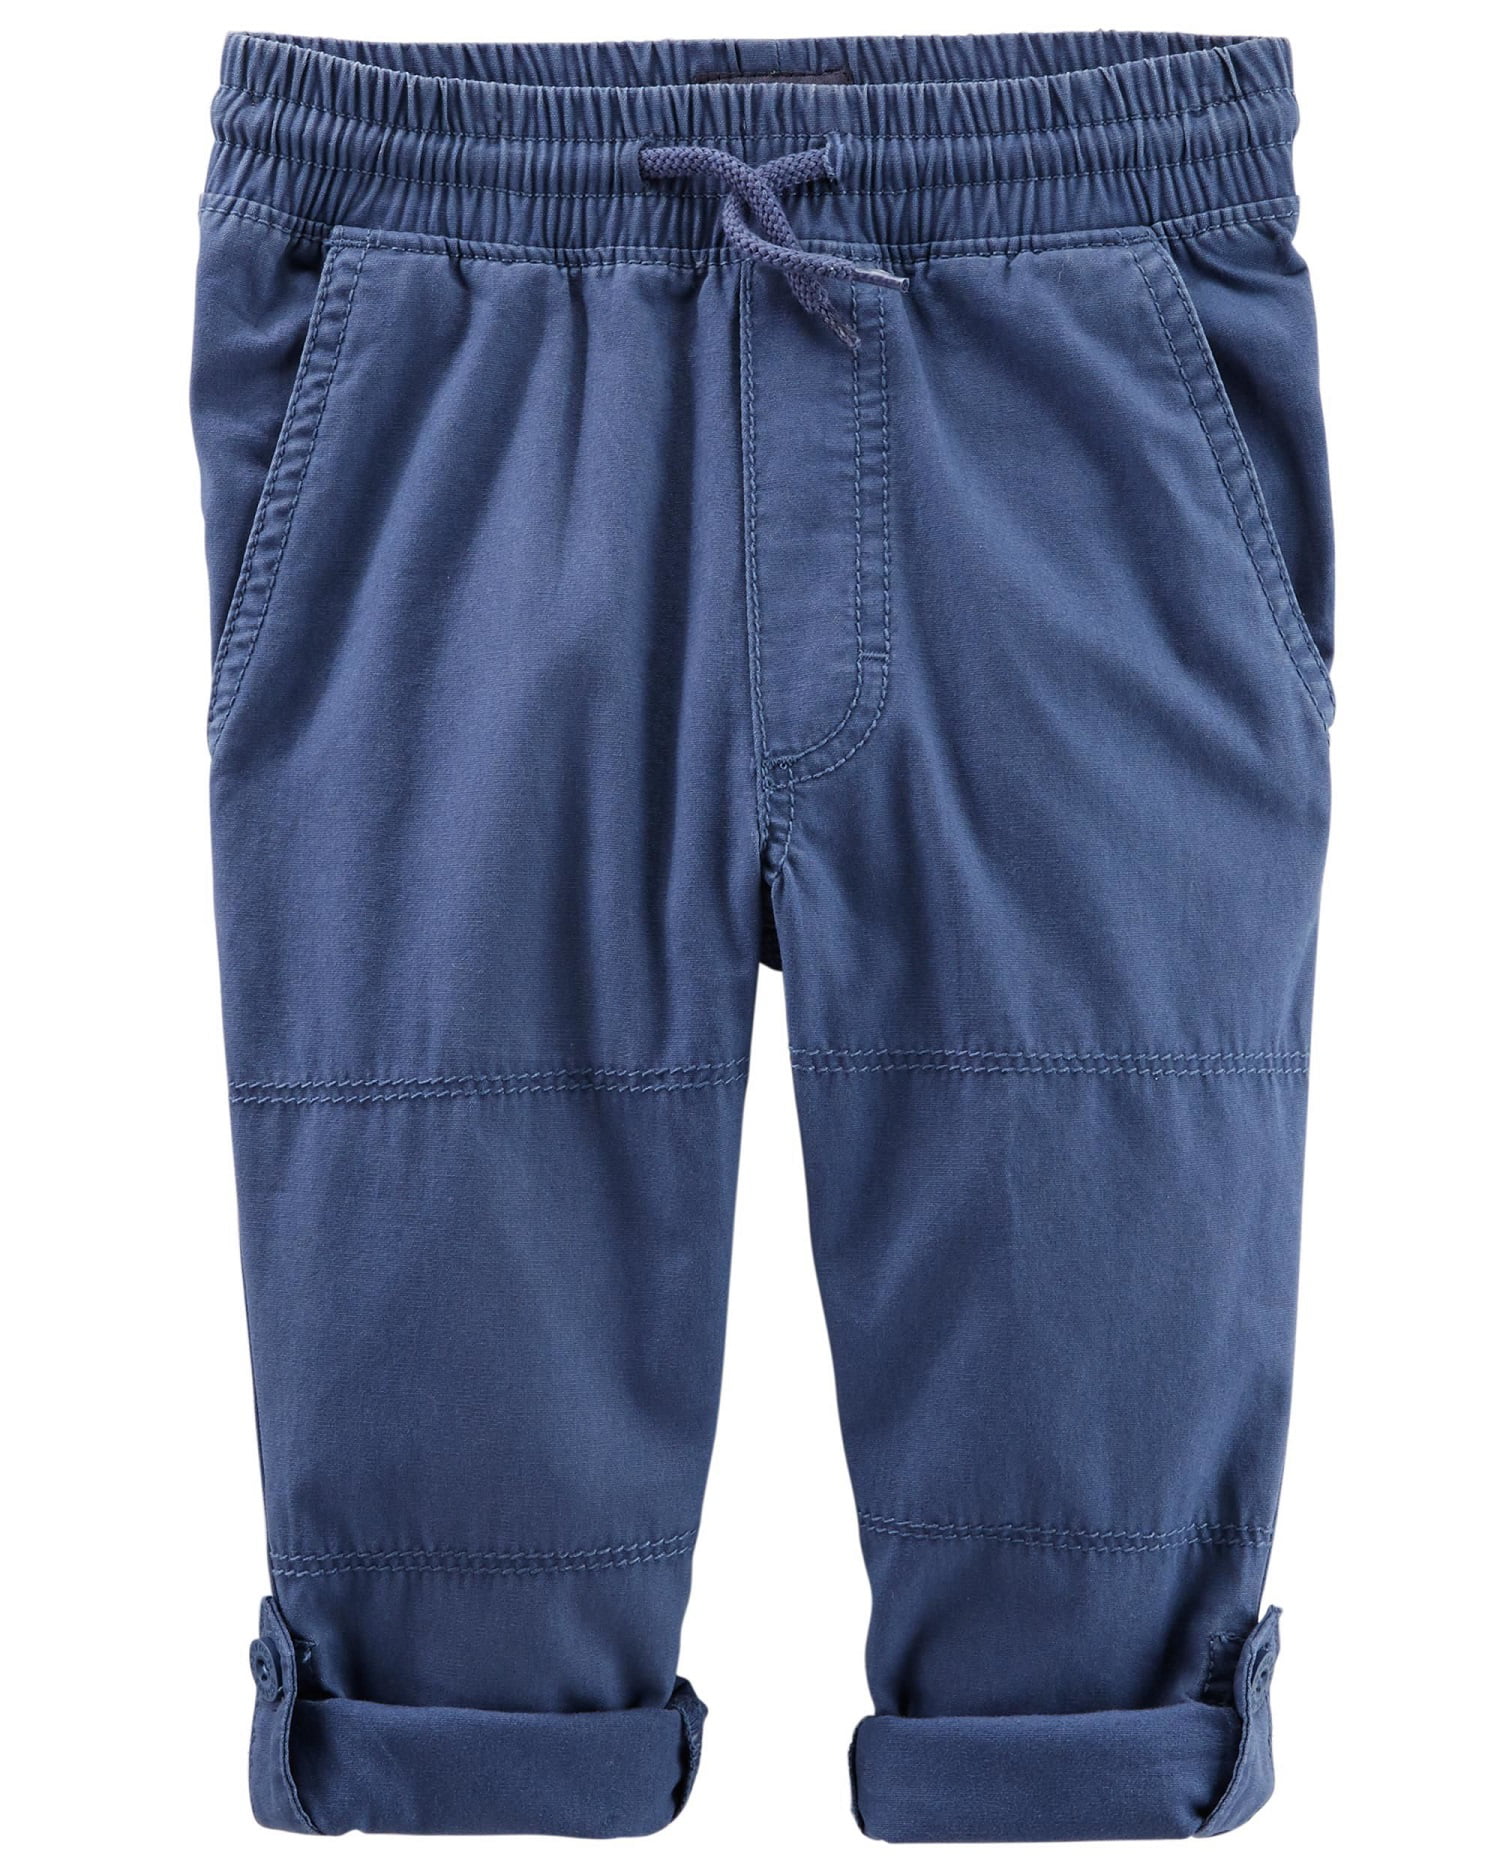 OshKosh B'gosh Big Boys' Convertible Canvas Pants, Blue, 14 Kids -  Walmart.com